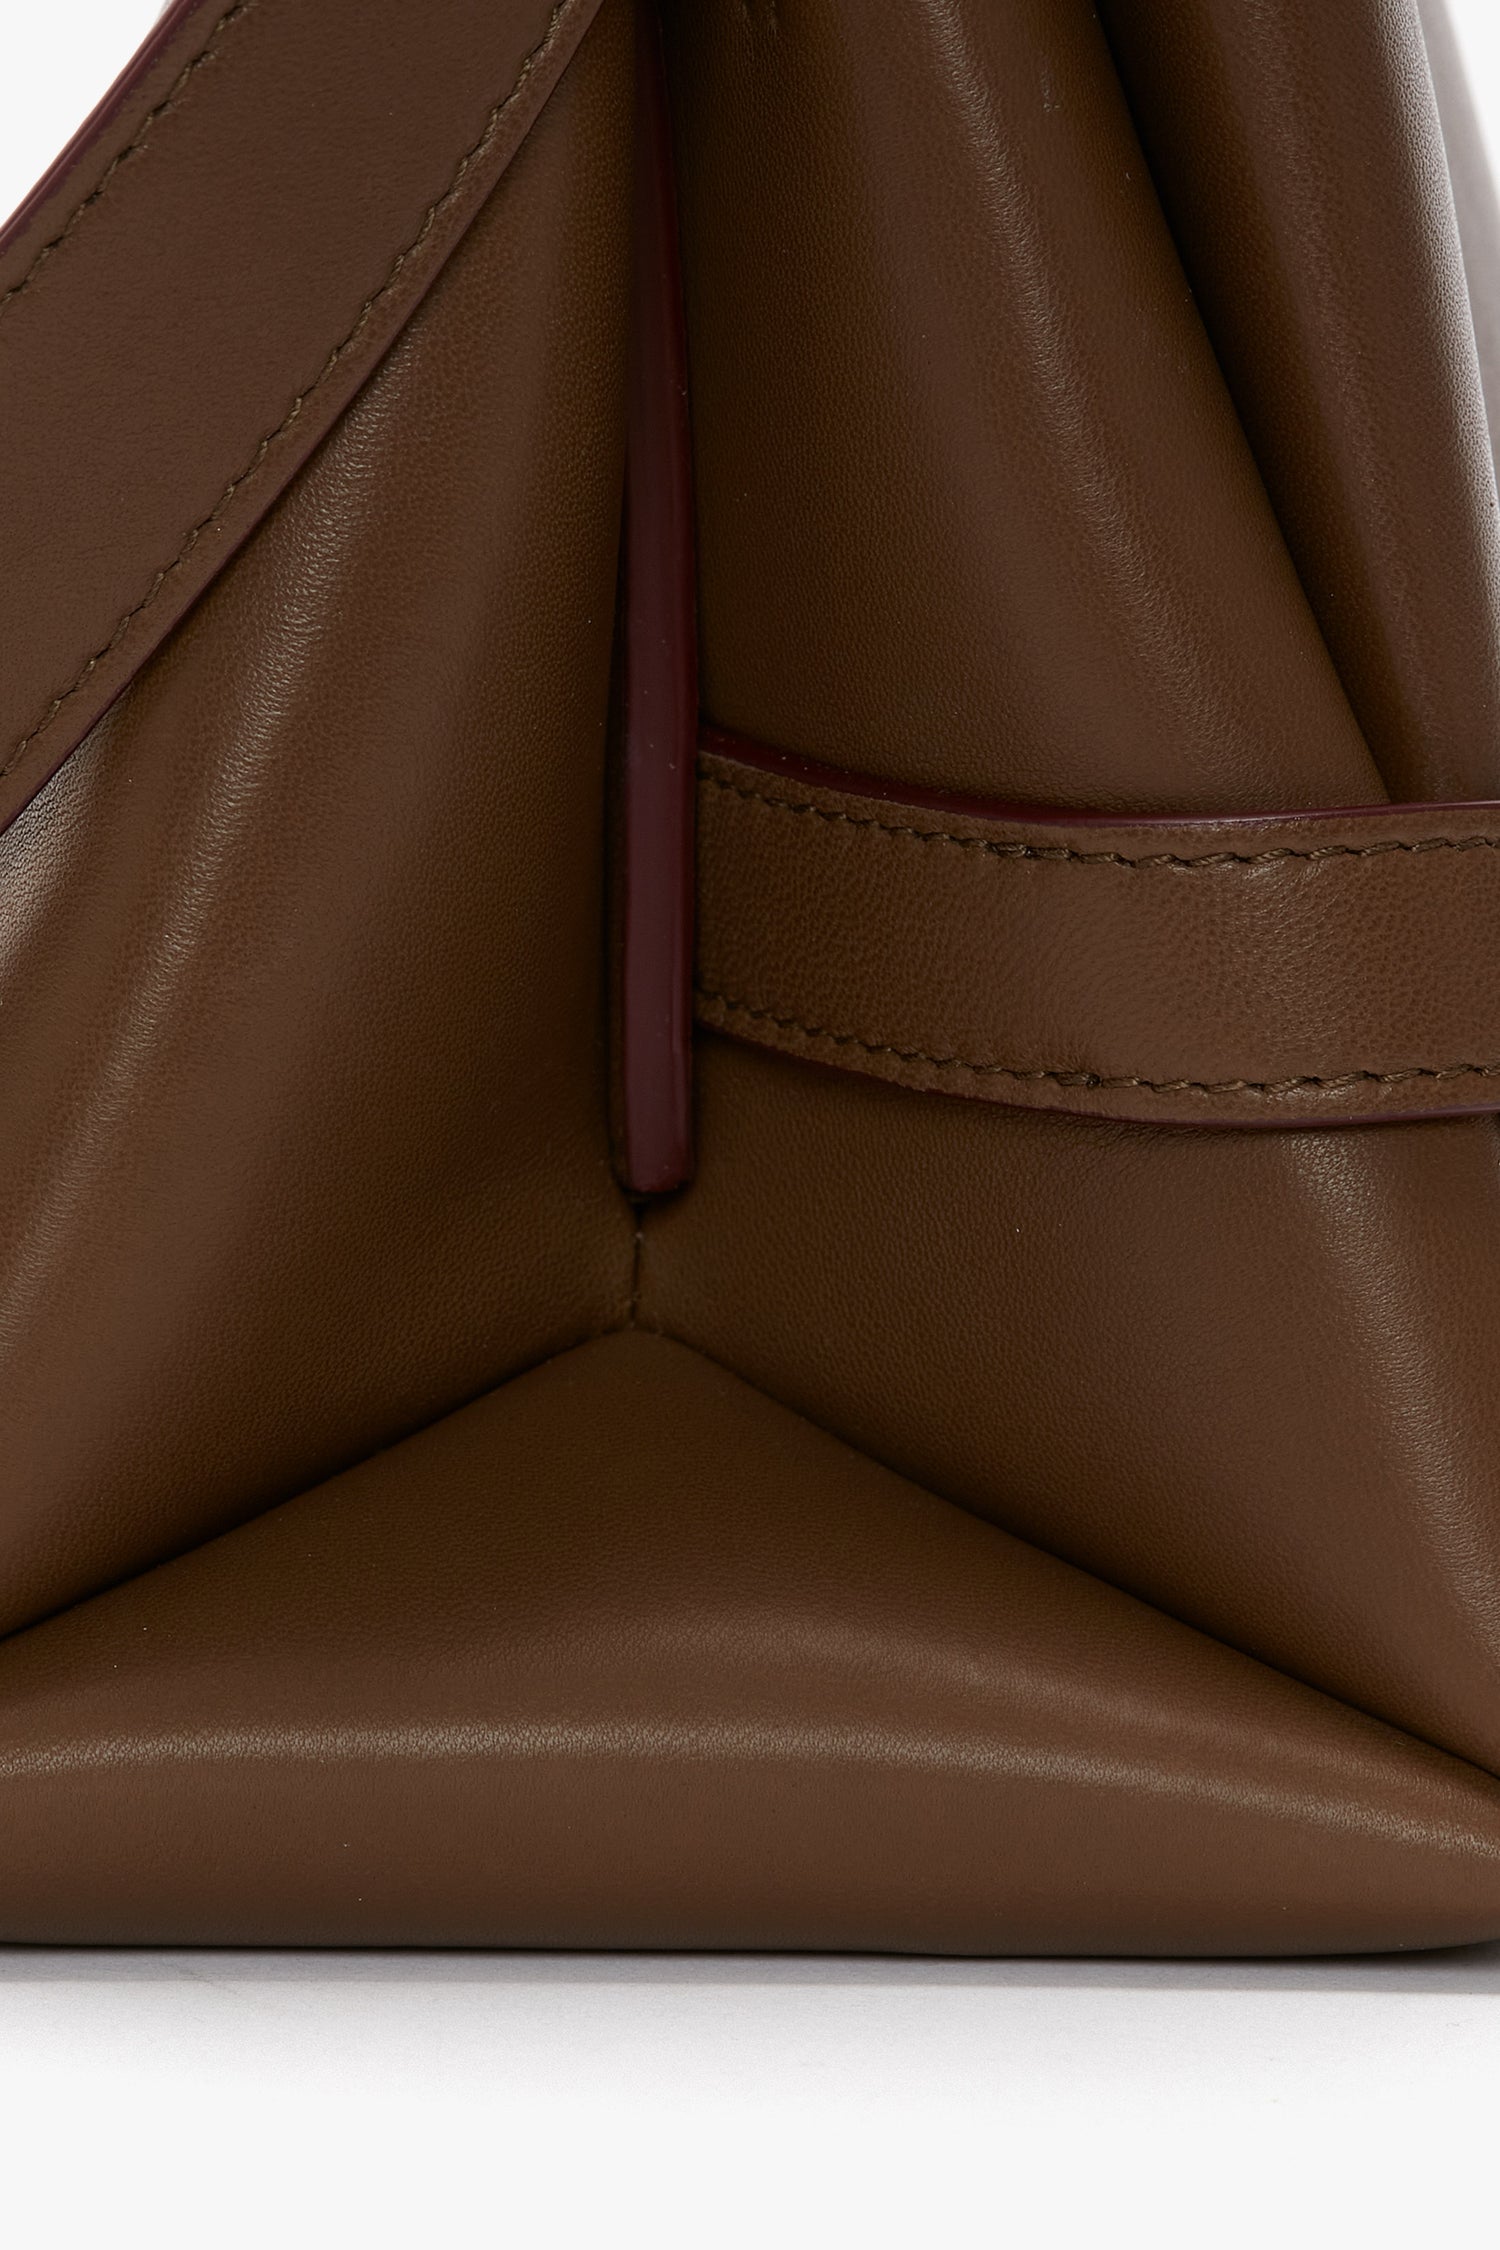 Victoria Beckham Chain Pouch With Strap Khaki Leather Shoulder Bag